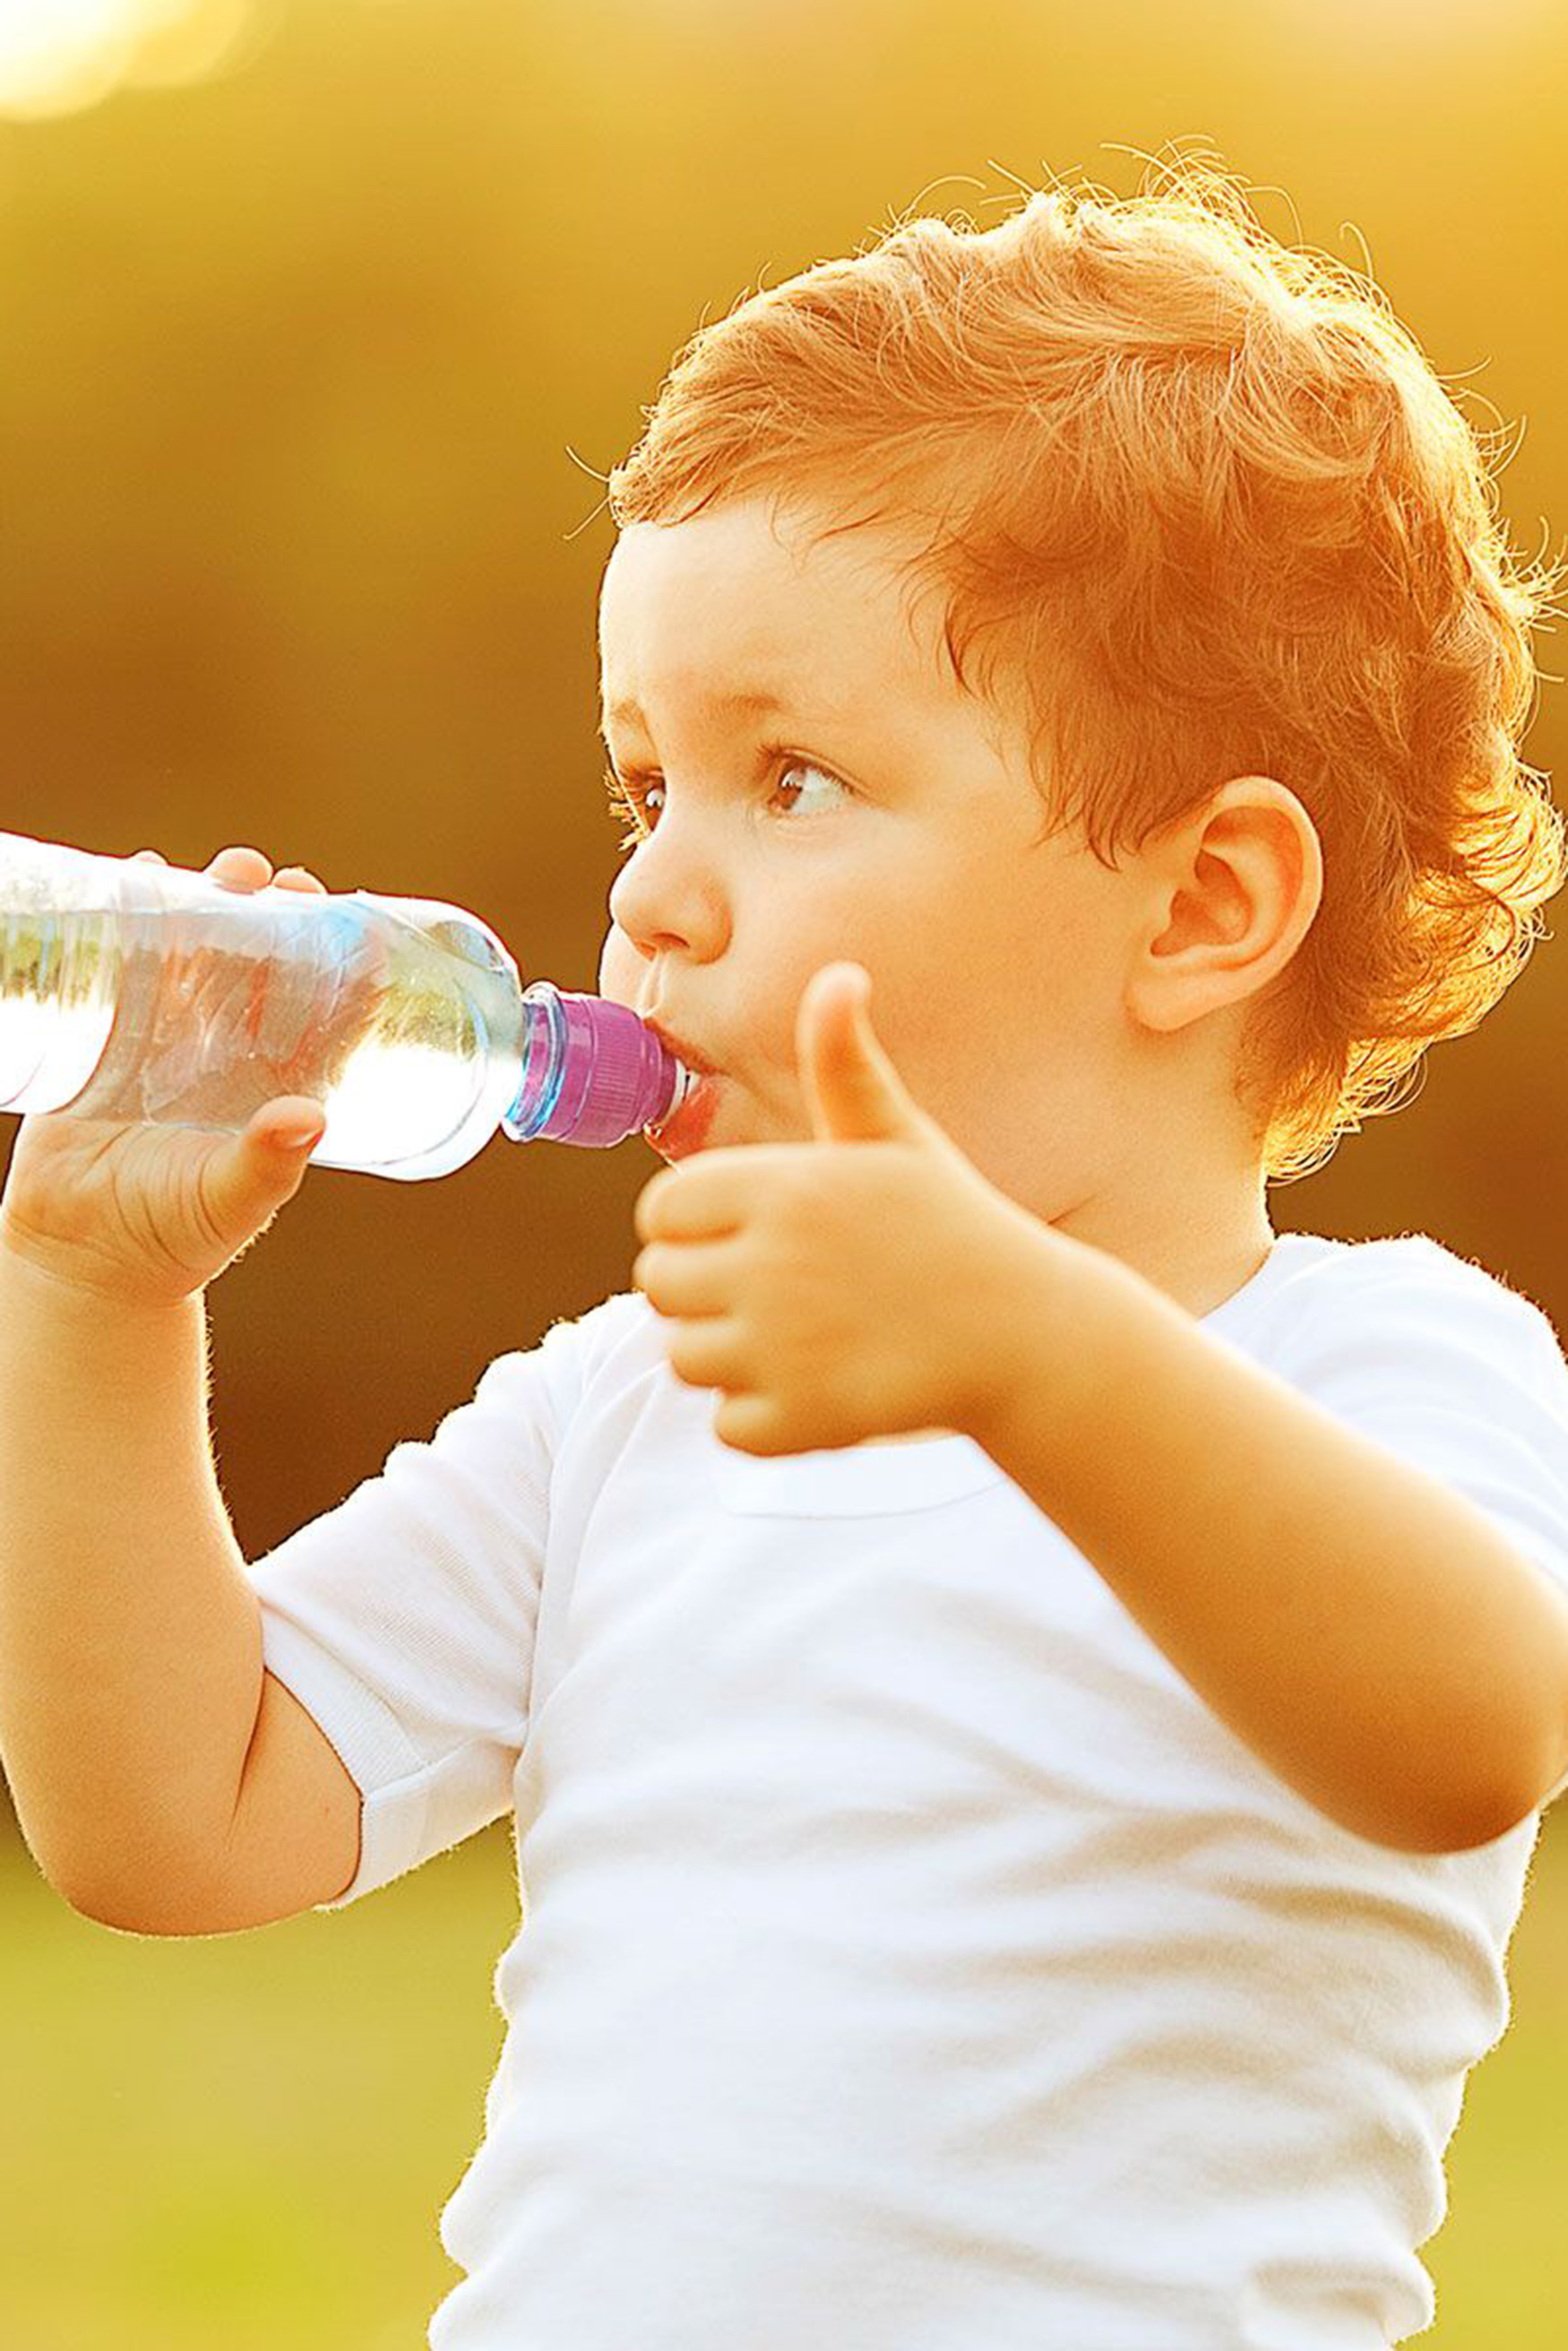 Kid drinking water